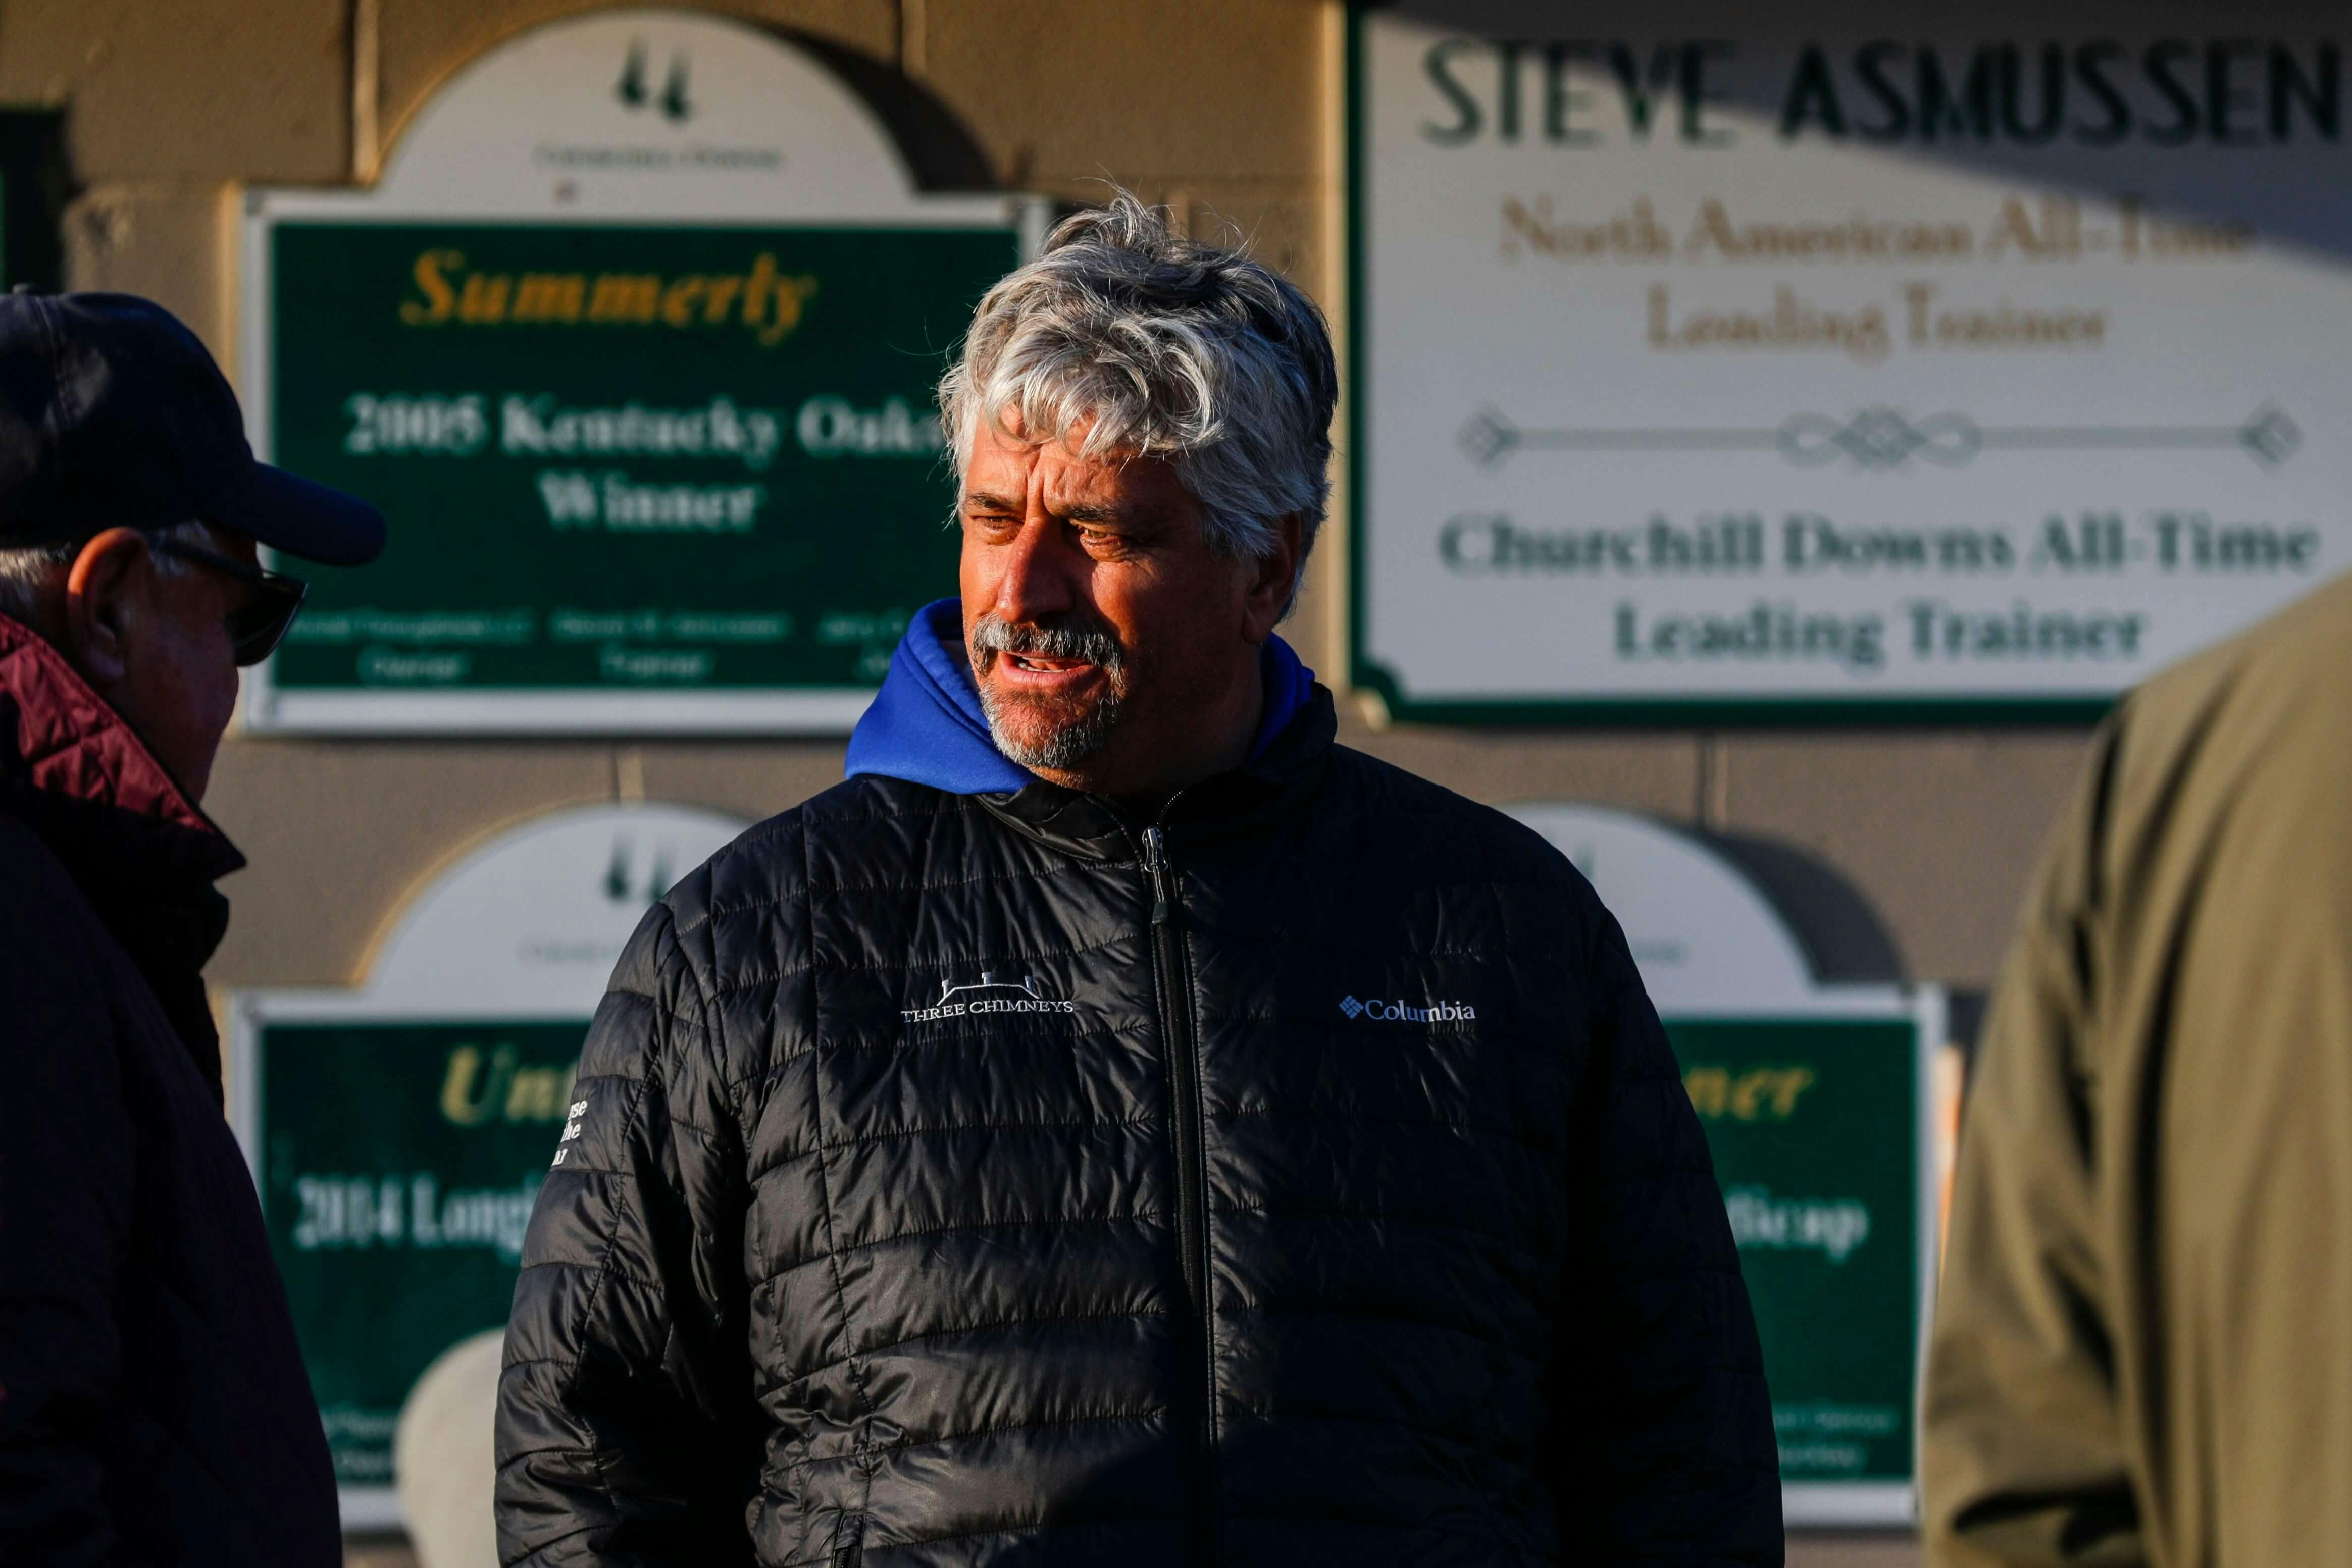 Steve Asmussen horse racing